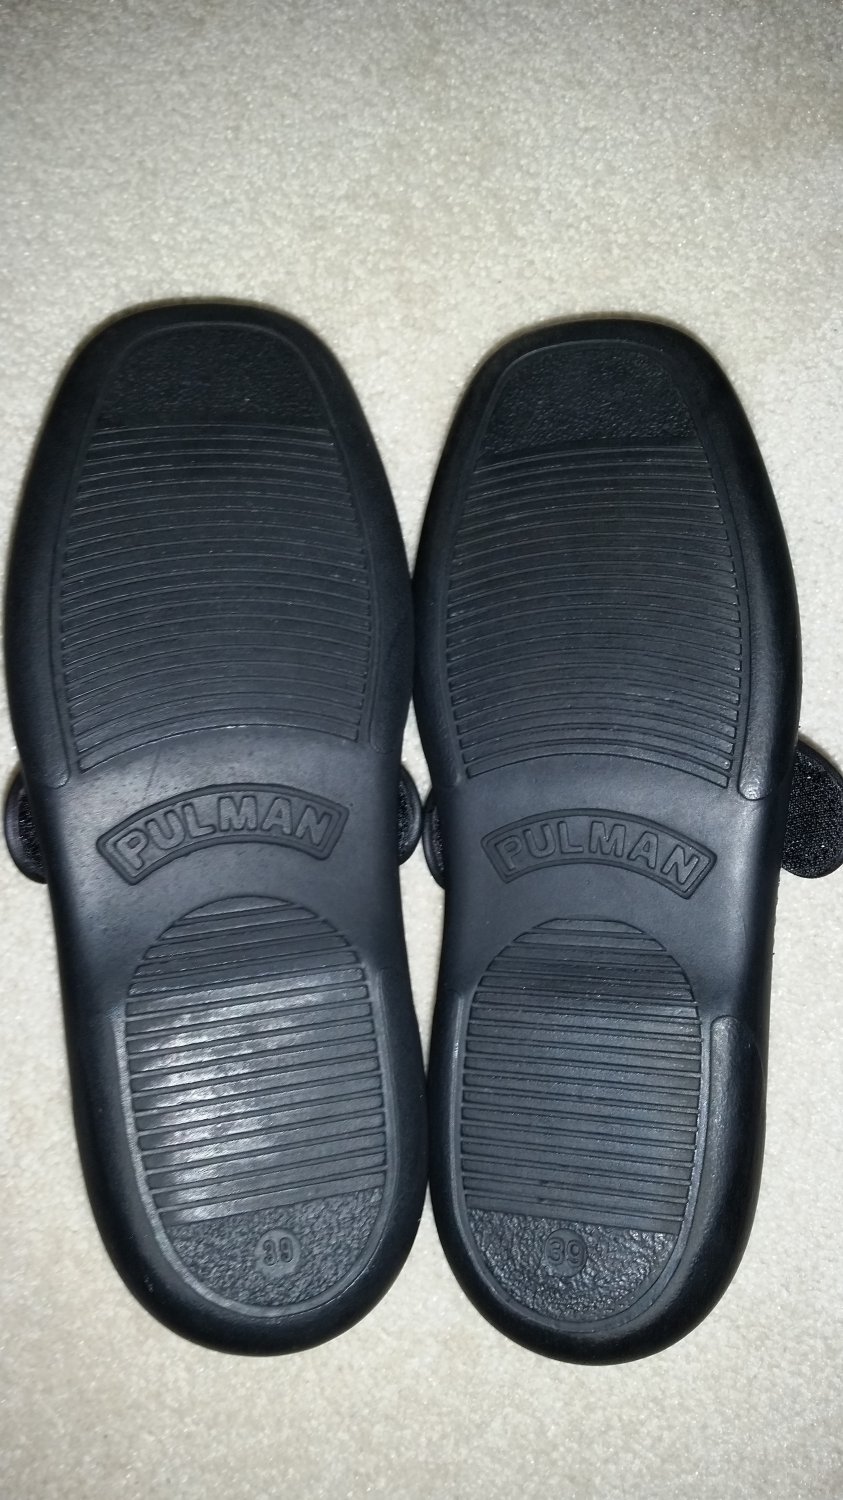 Pulman New City Footwear Comfort Shoe for Diabetics/Edema - Size 8 (39 ...